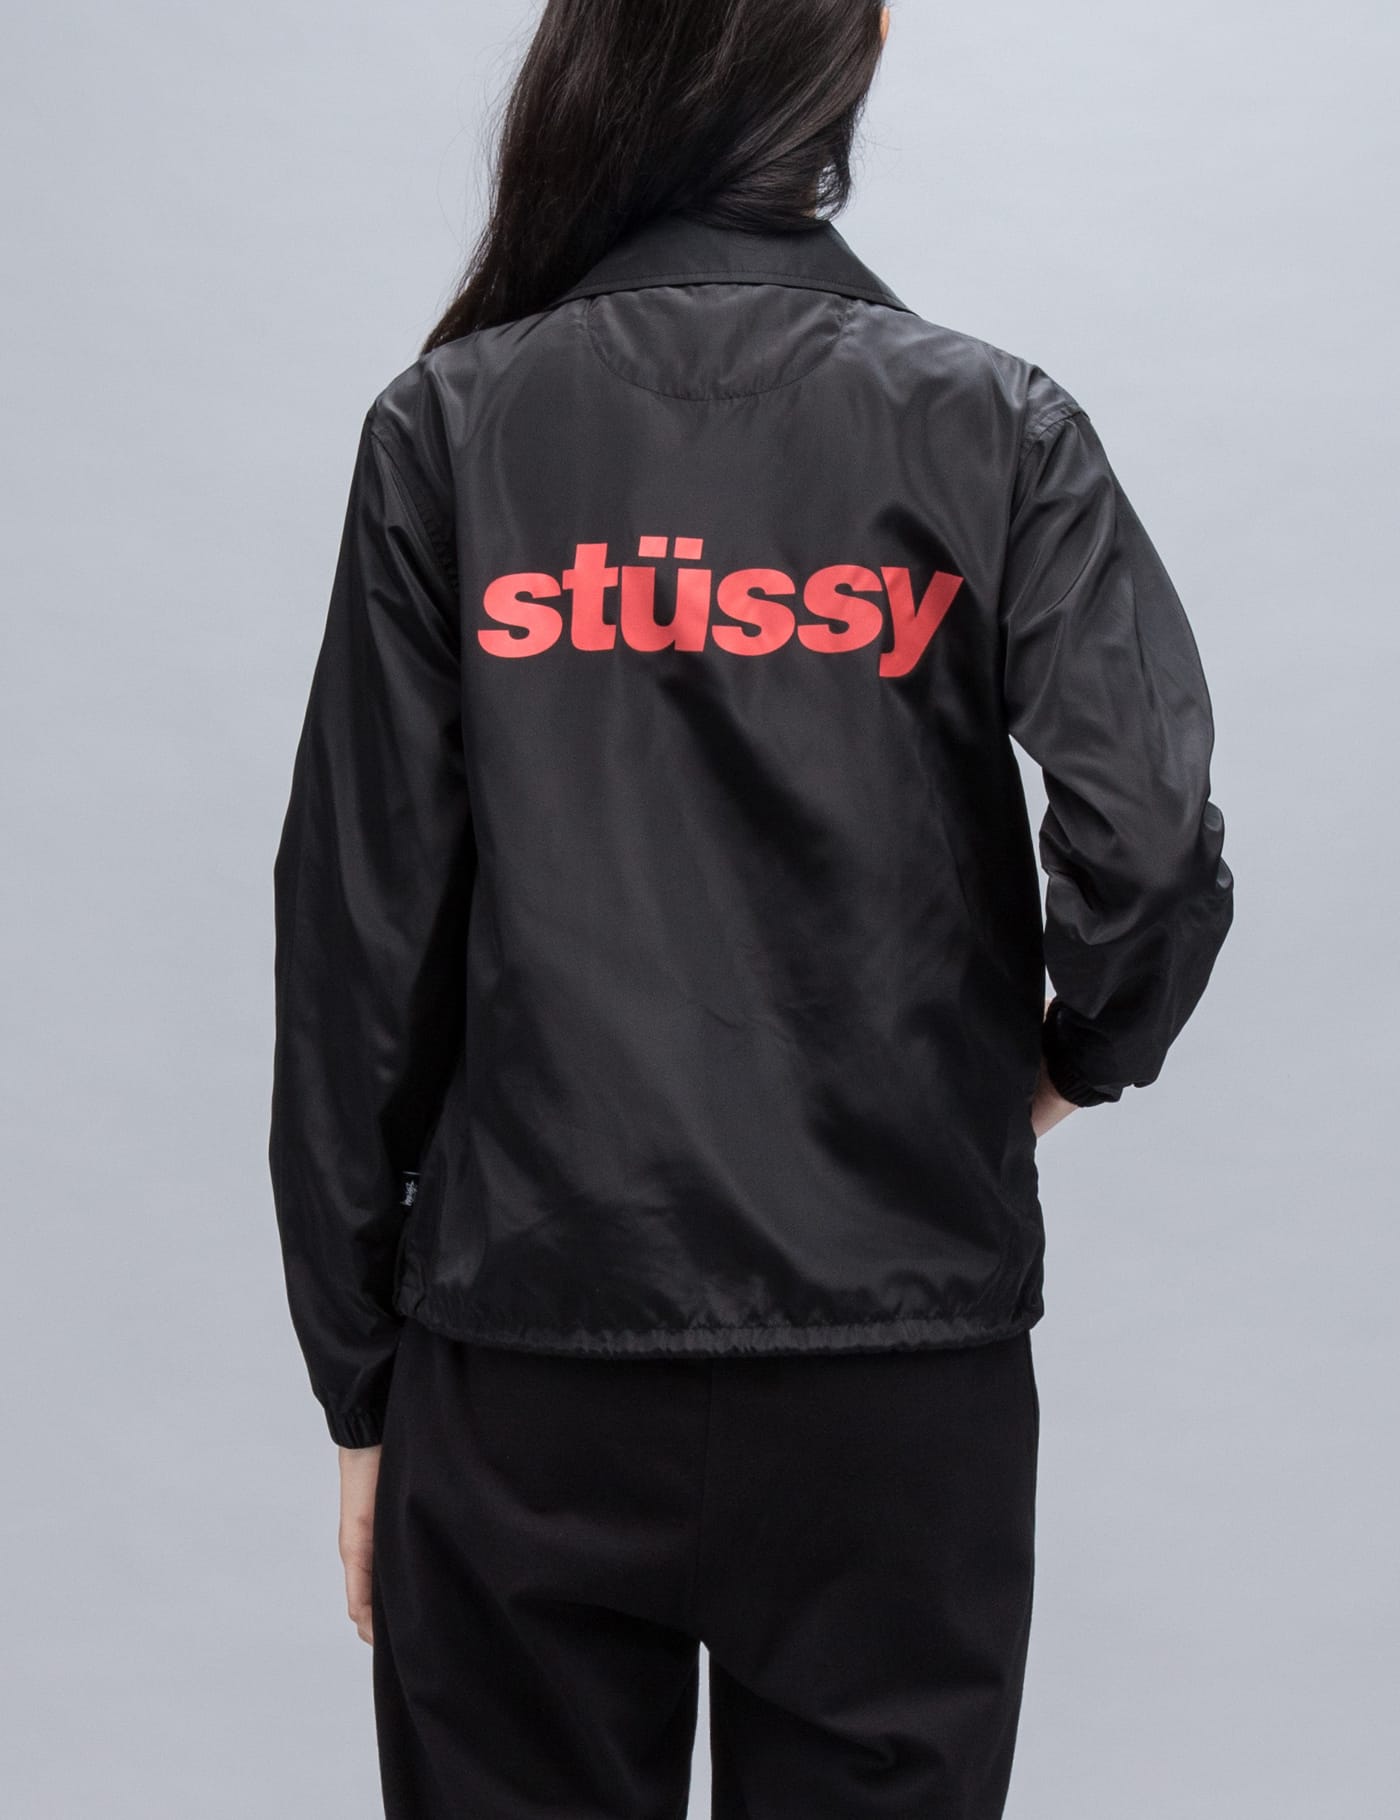 Stussy - Stussy Sport Coach Jacket | HBX - Globally Curated 